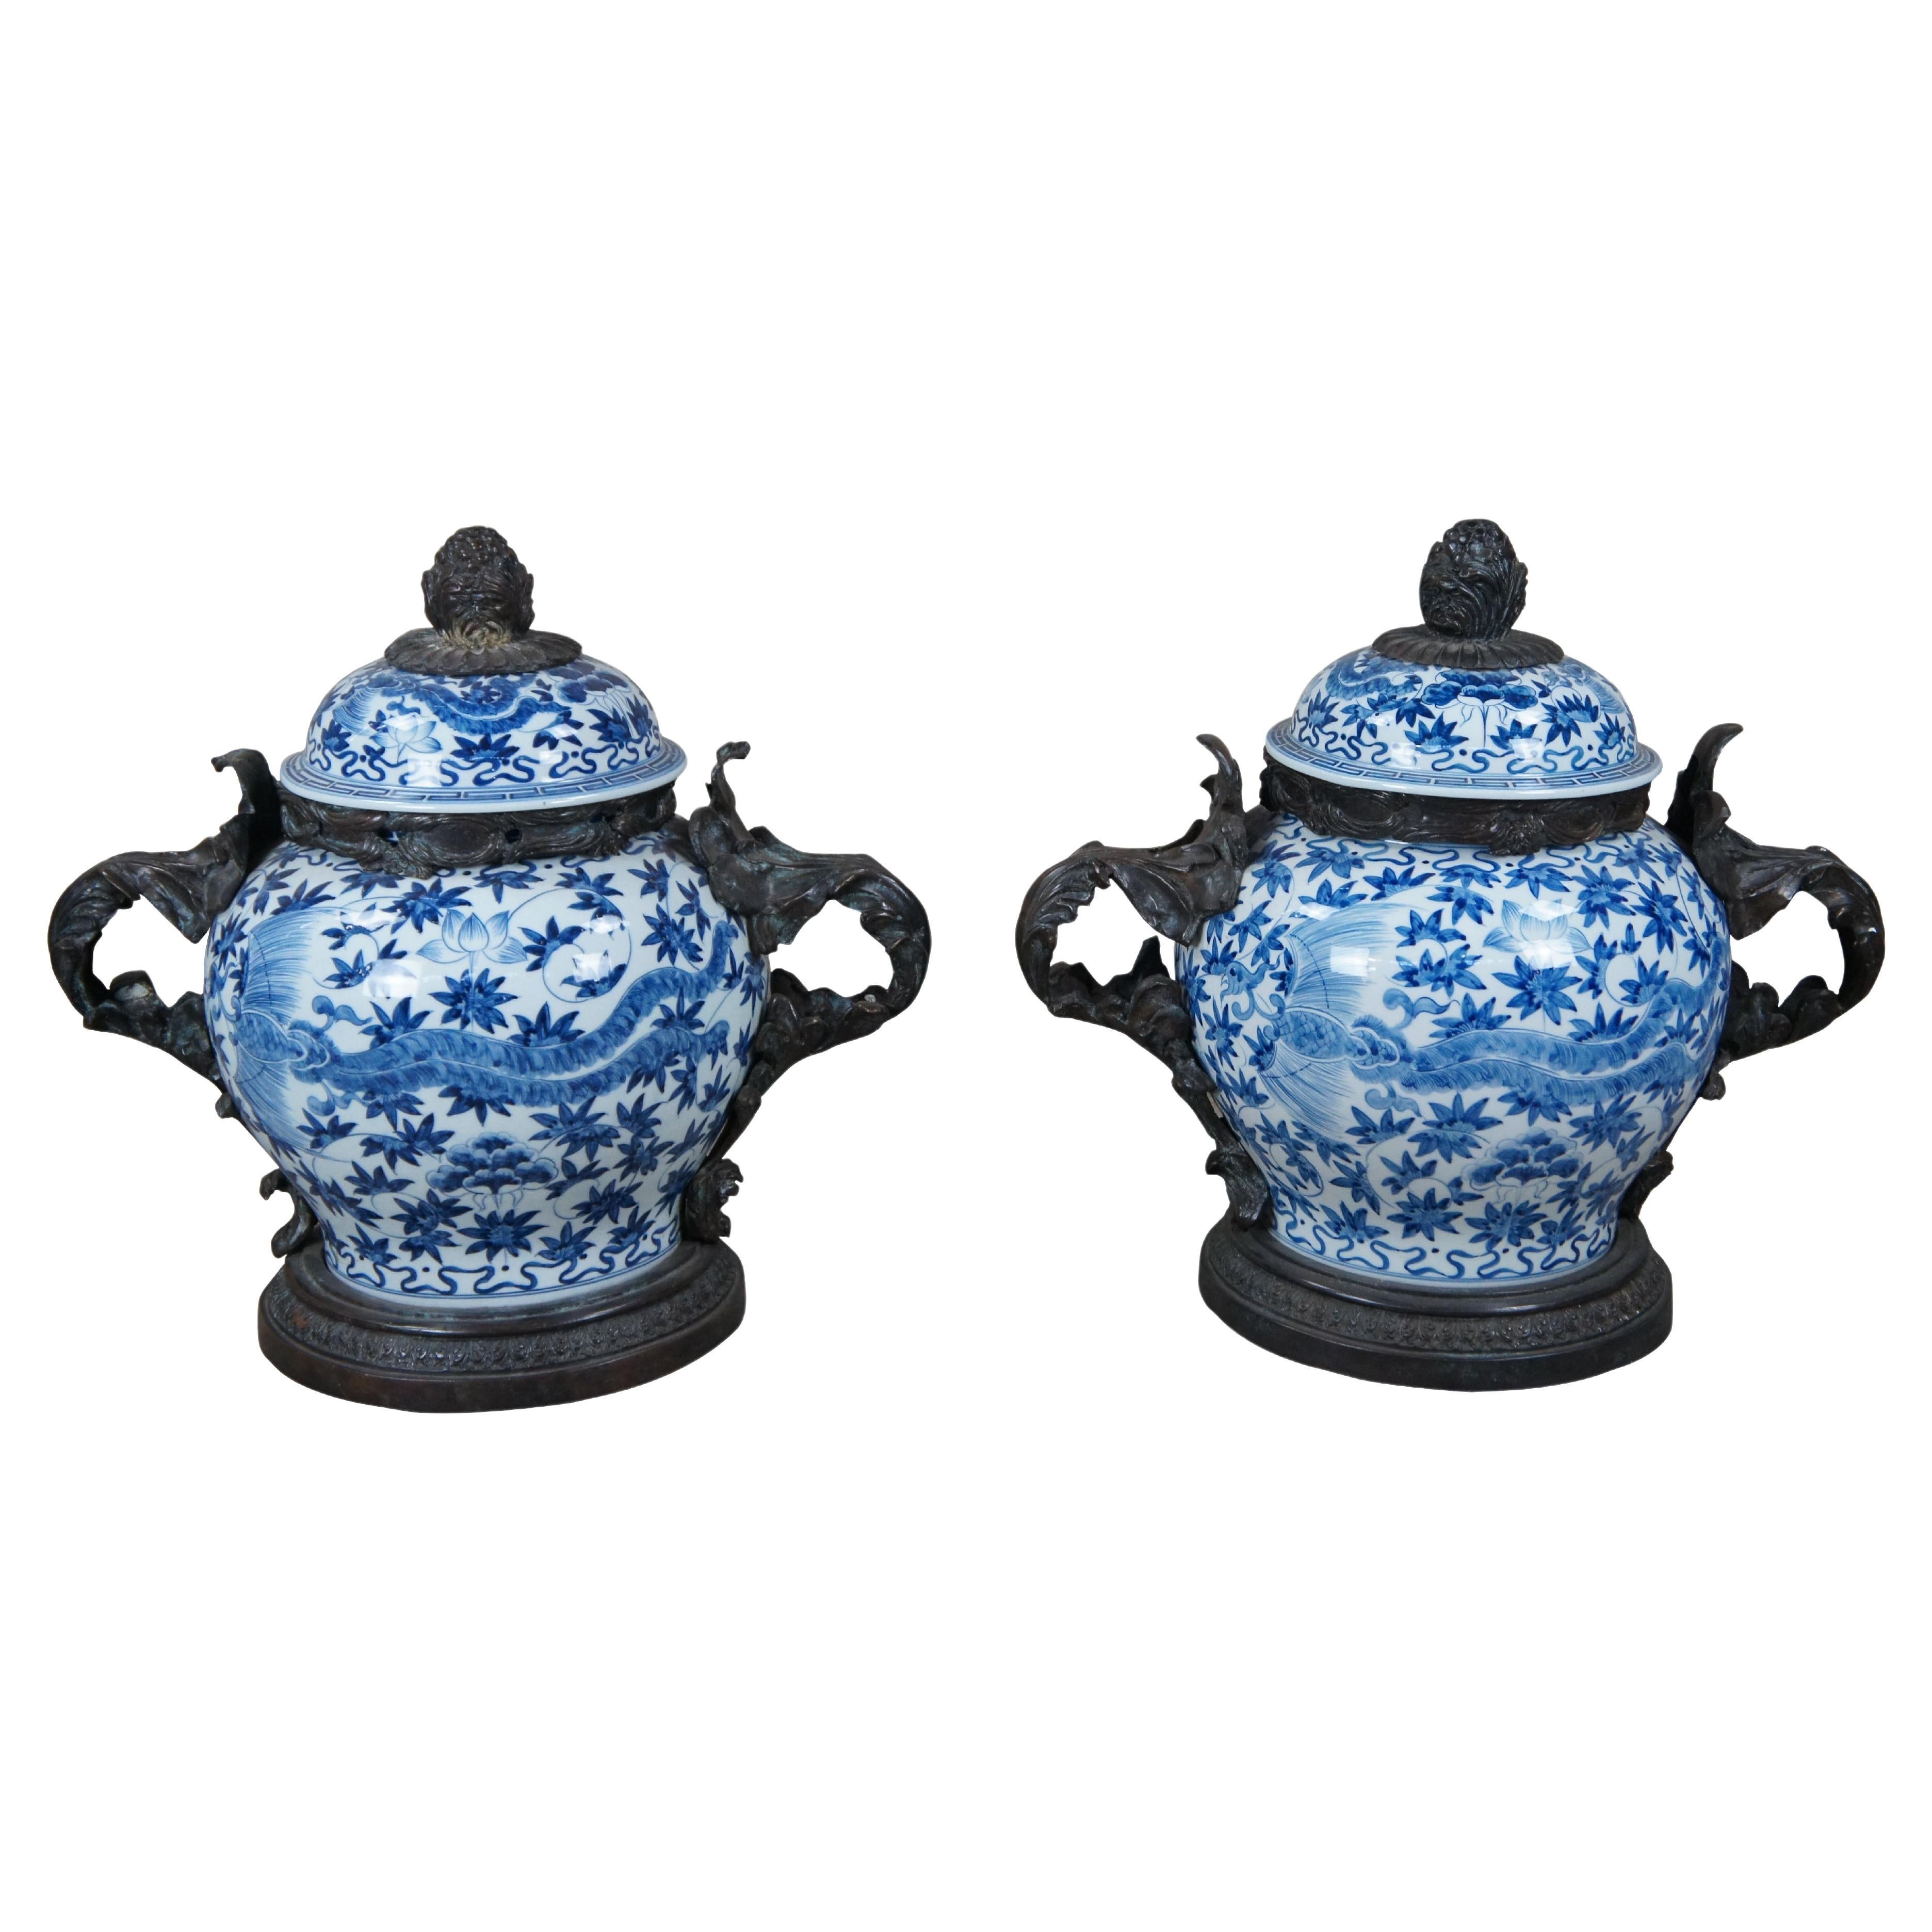 2 Maitland Smith Blue & White Chinoiserie Porcelain Bronze Ginger Jars Urns Pair